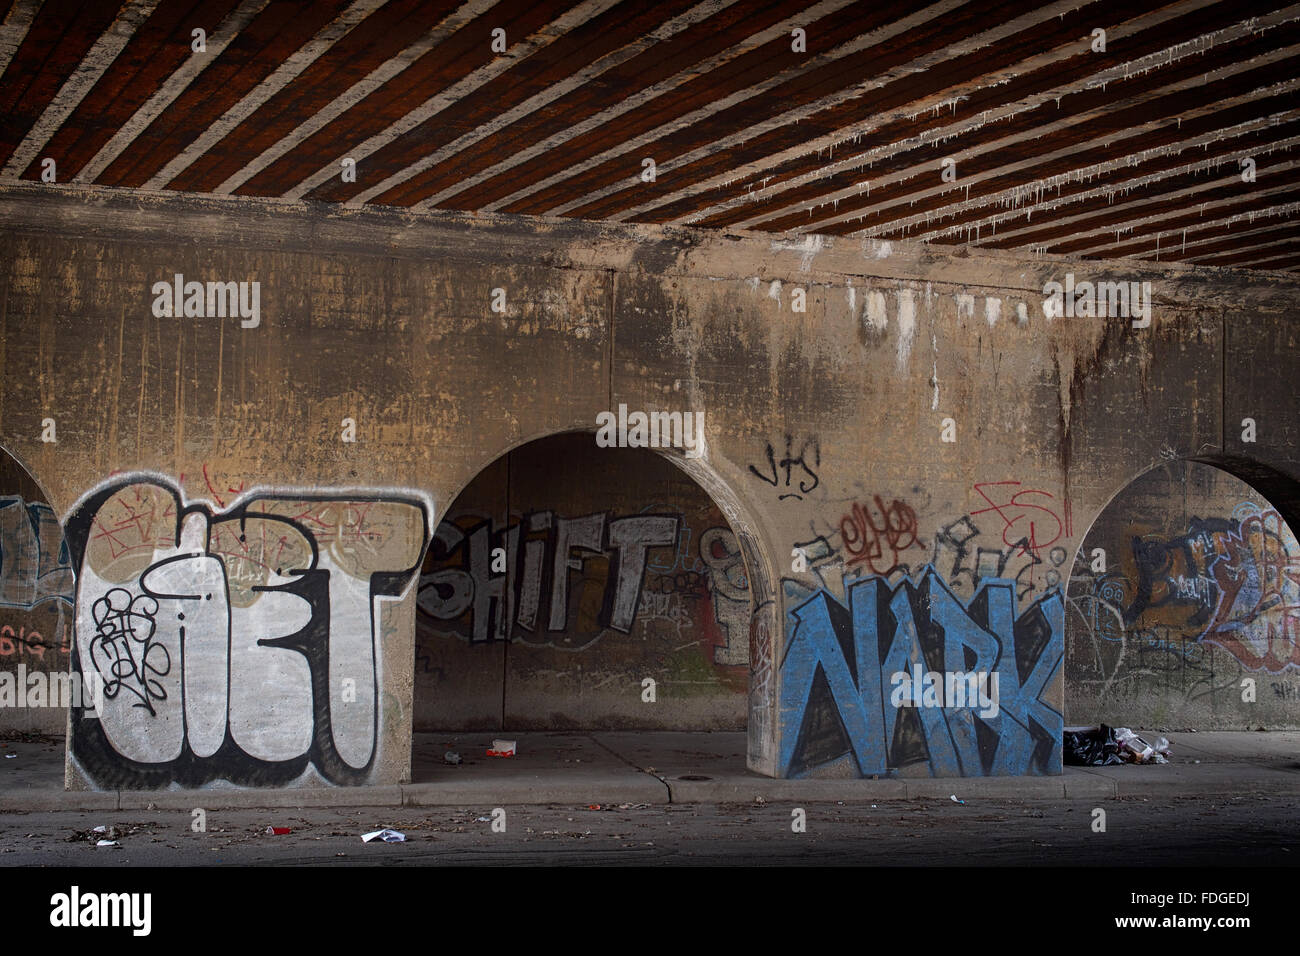 Graffiti found under a viaduct in Milwaukee Junction Detroit Stock Photo